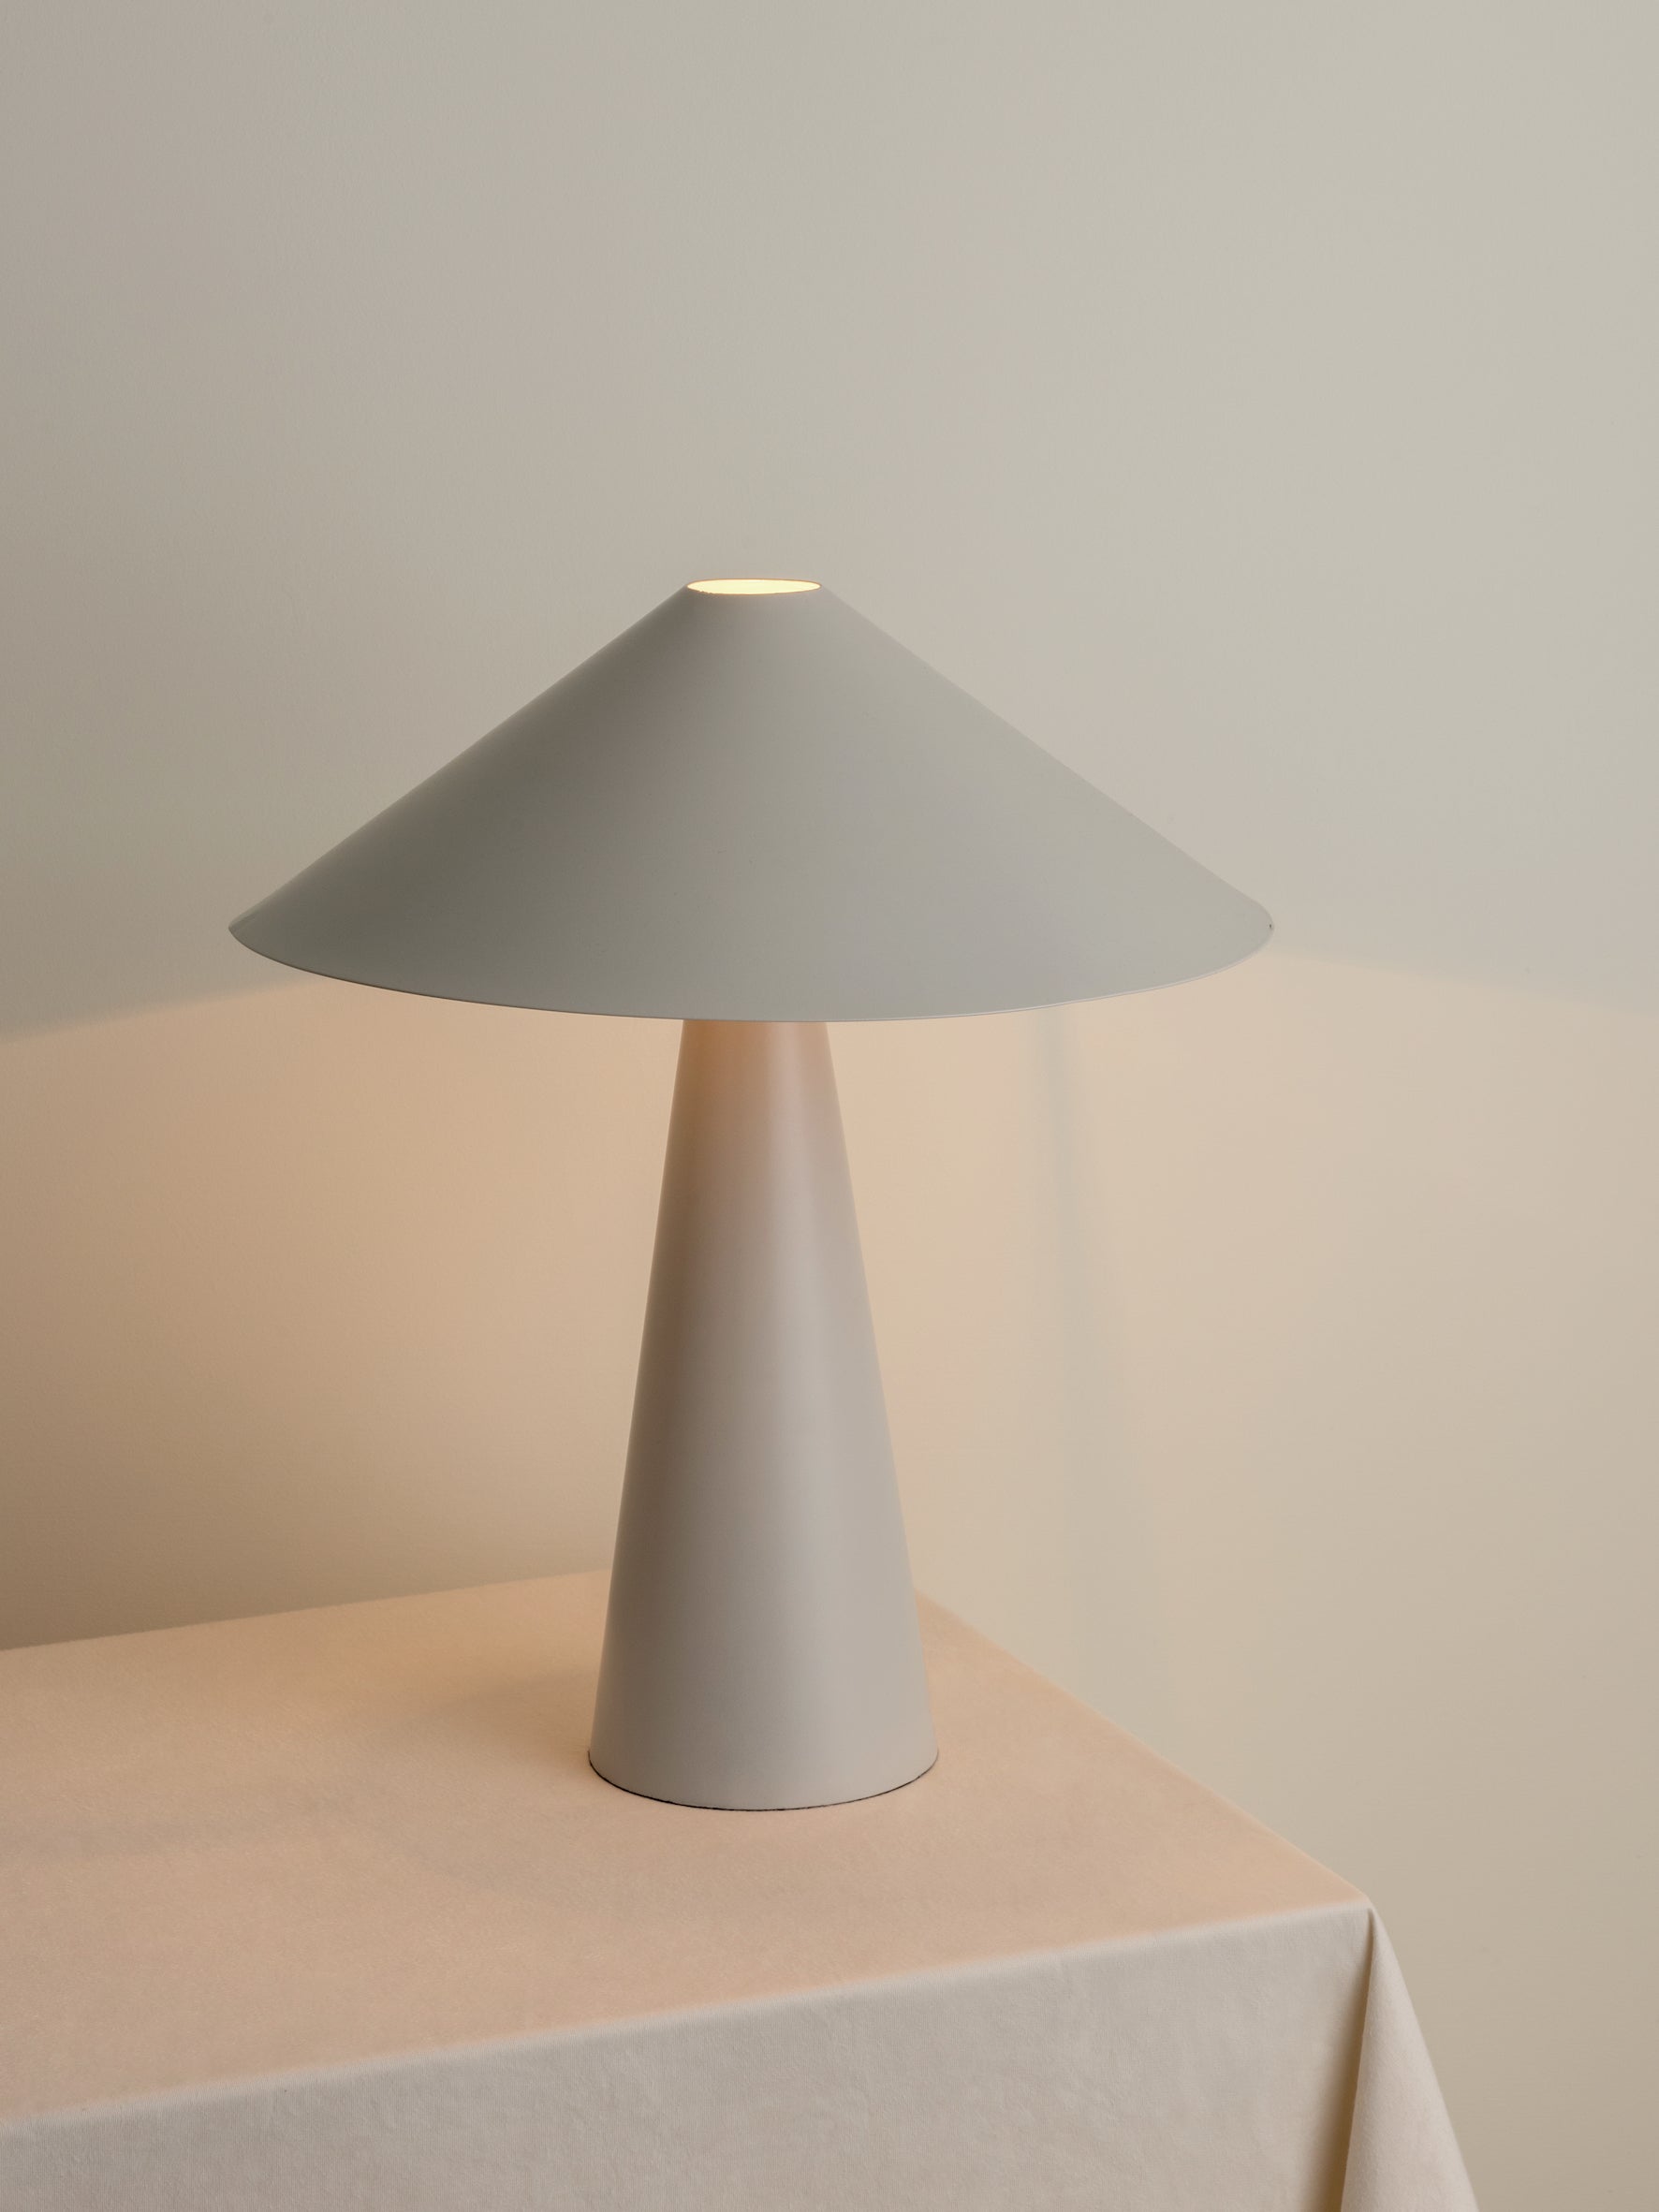 Orta - 1 light warm white cone table lamp | Table Lamp | Lights & Lamps Inc | Modern Affordable Designer Lighting | USA